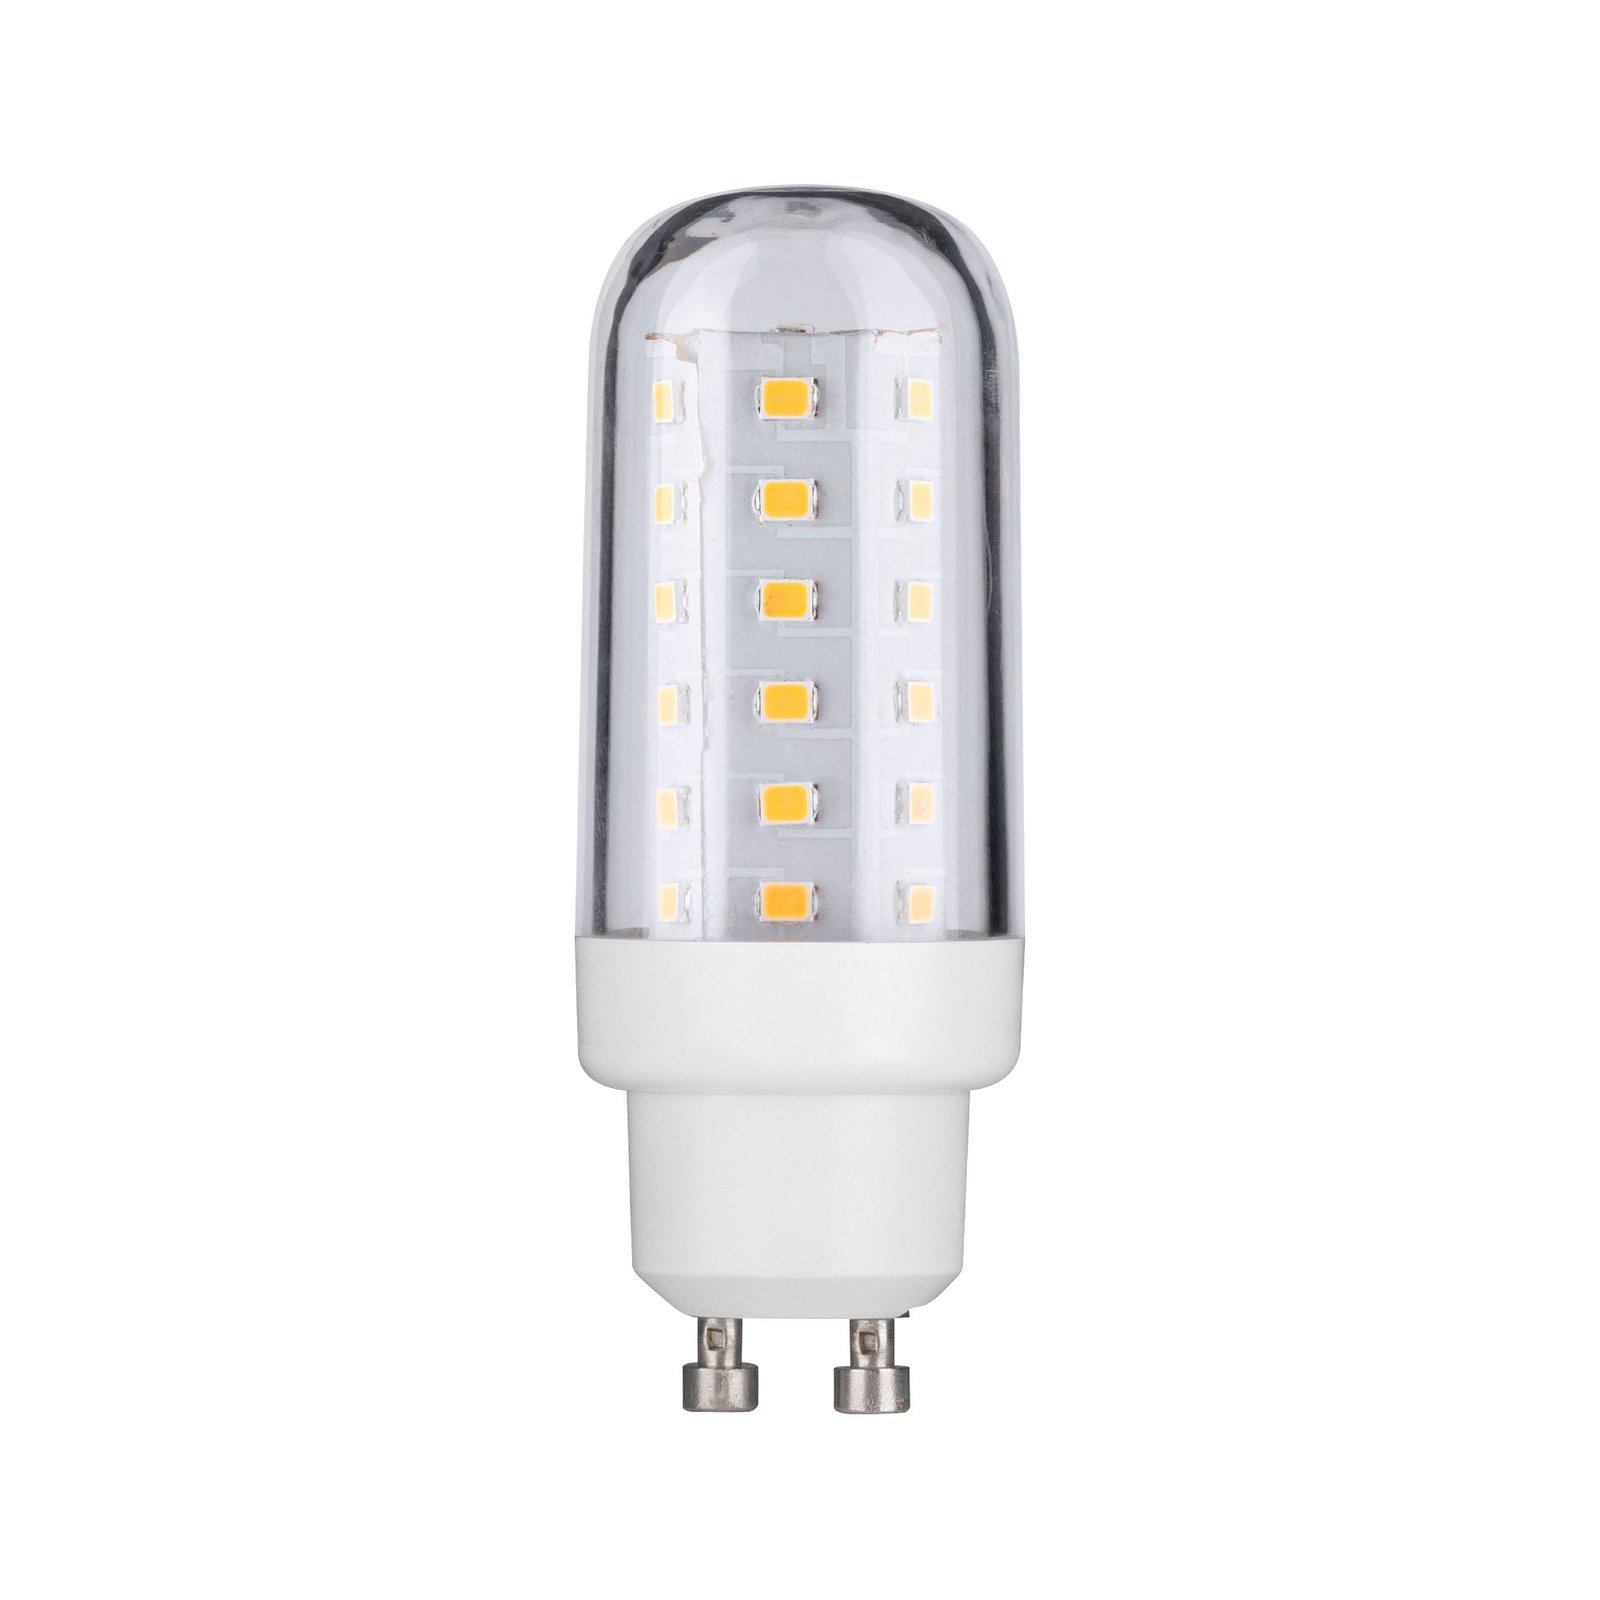 LED high-voltage pin base 3 Watt GU10 Warm white 230 V